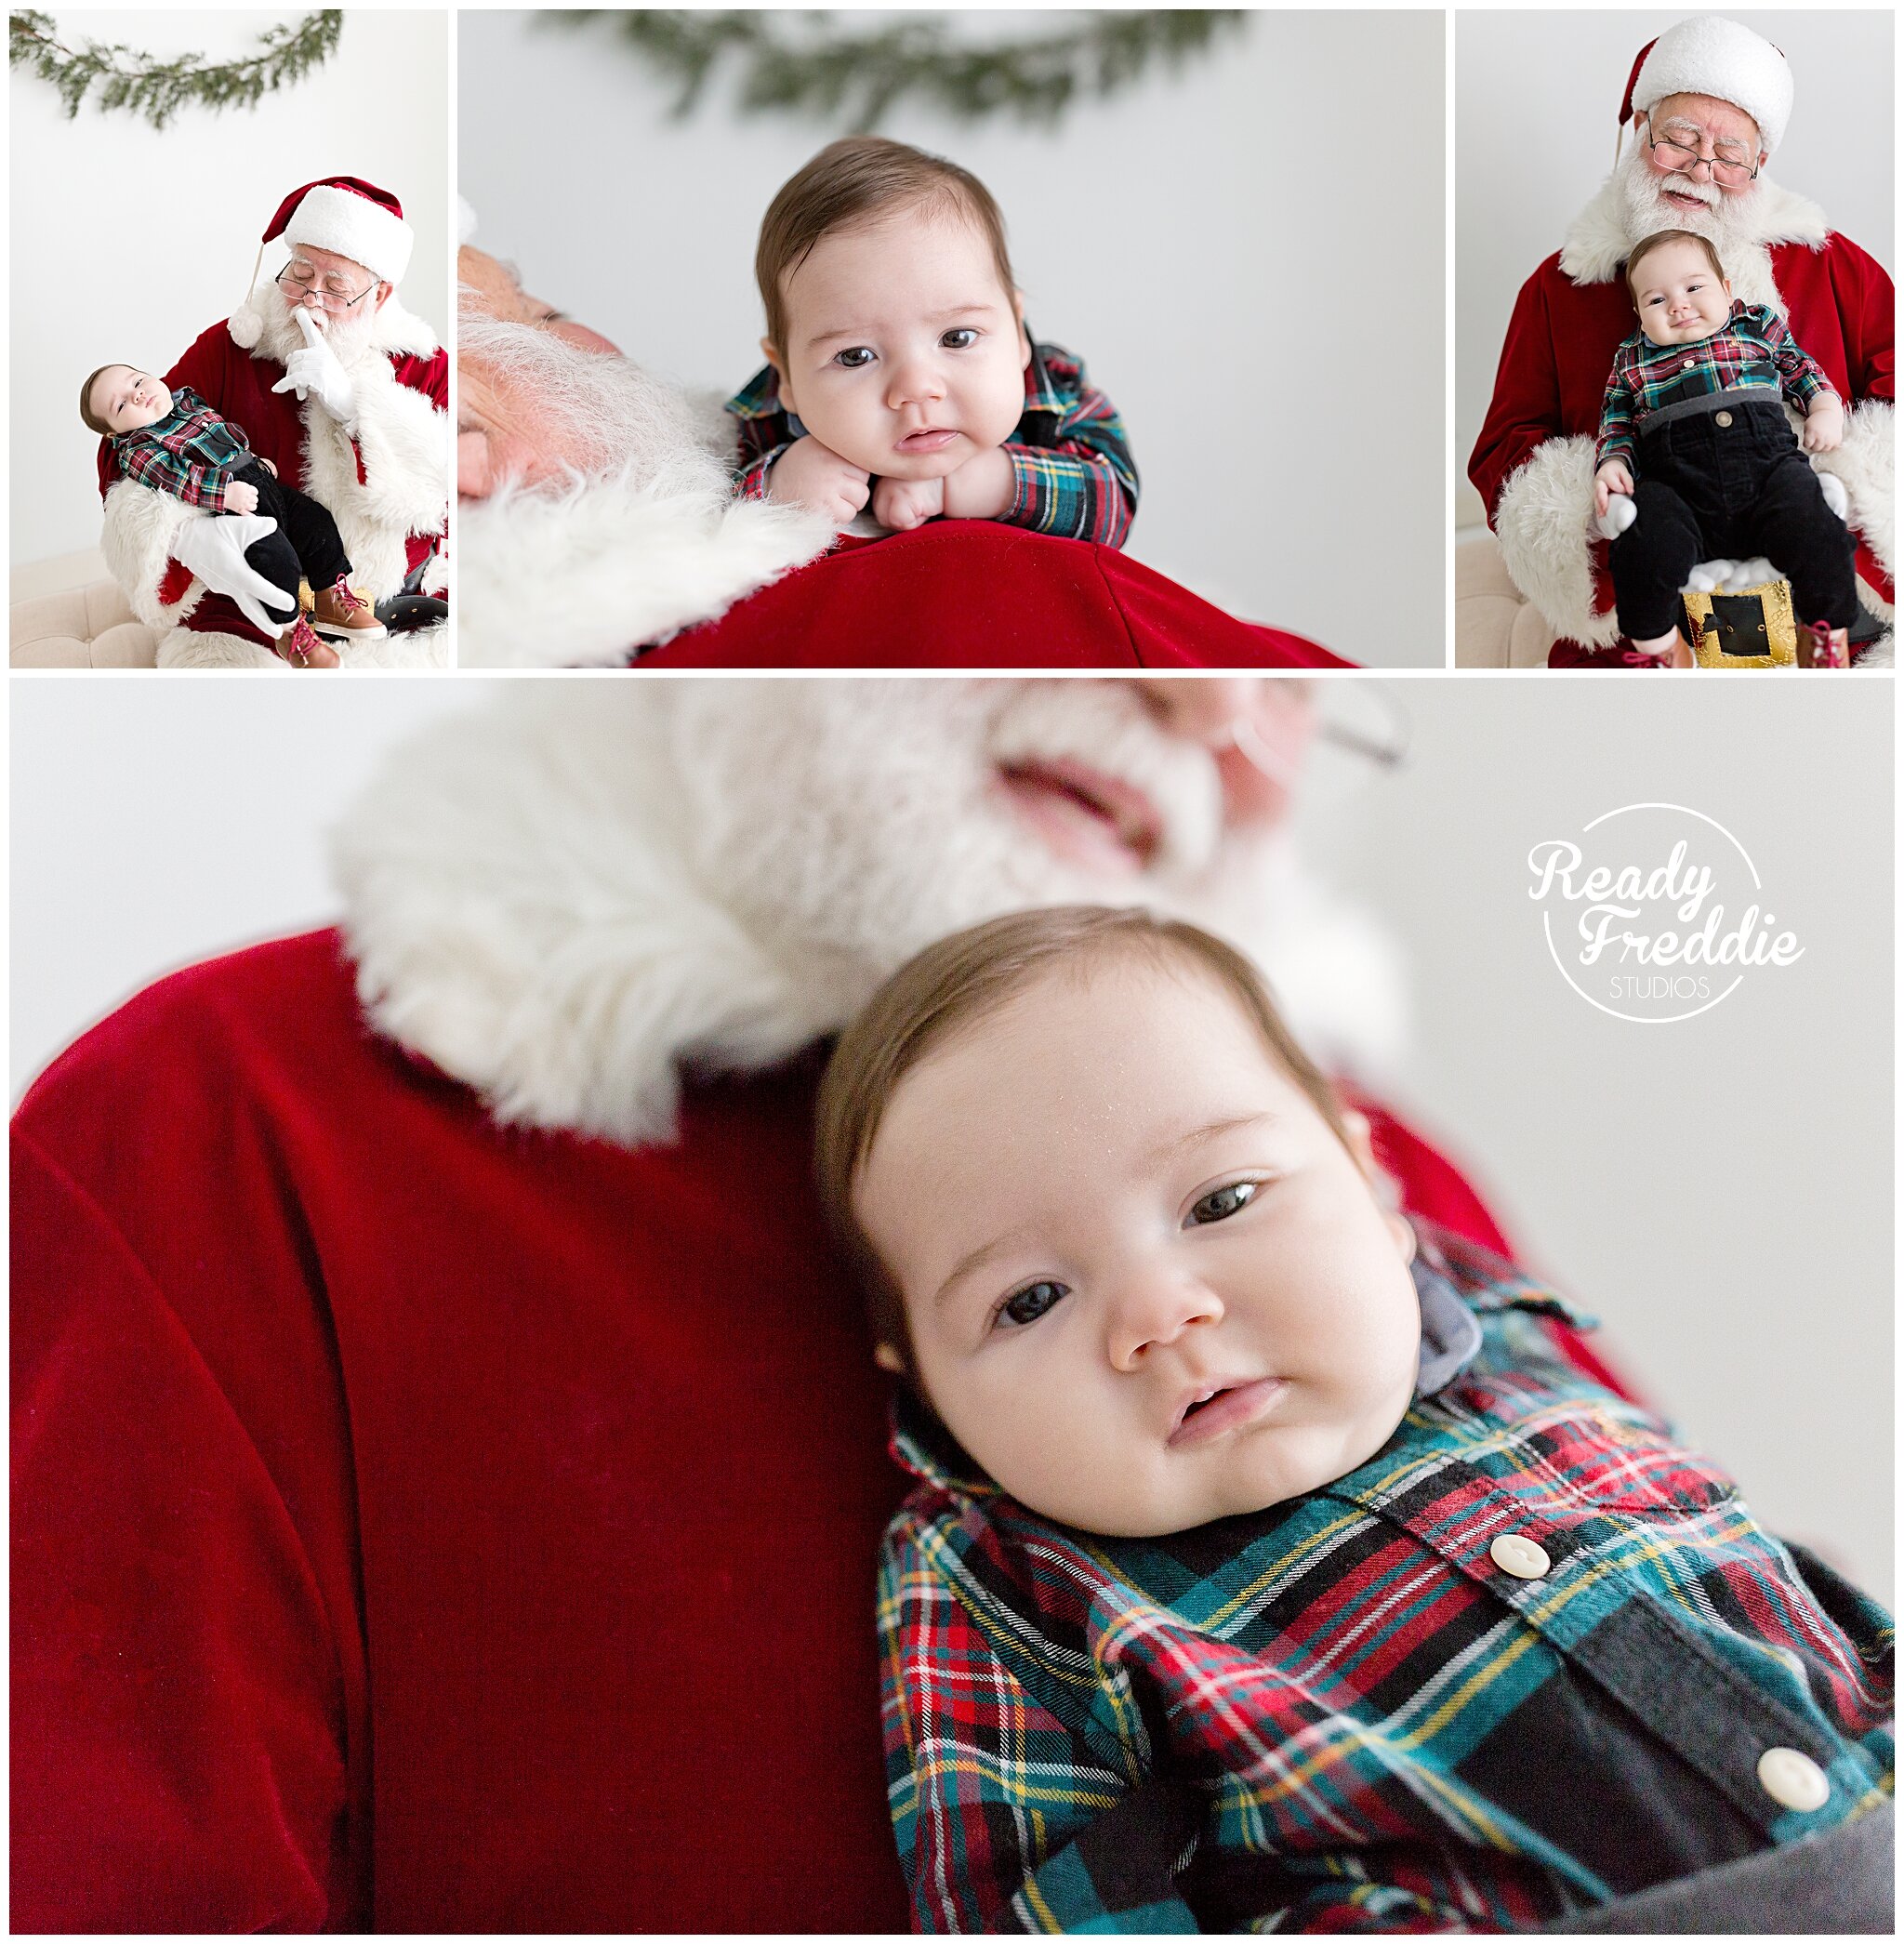 Baby's first Christmas Santa pictures | Ready Freddie Studios Miami, FL